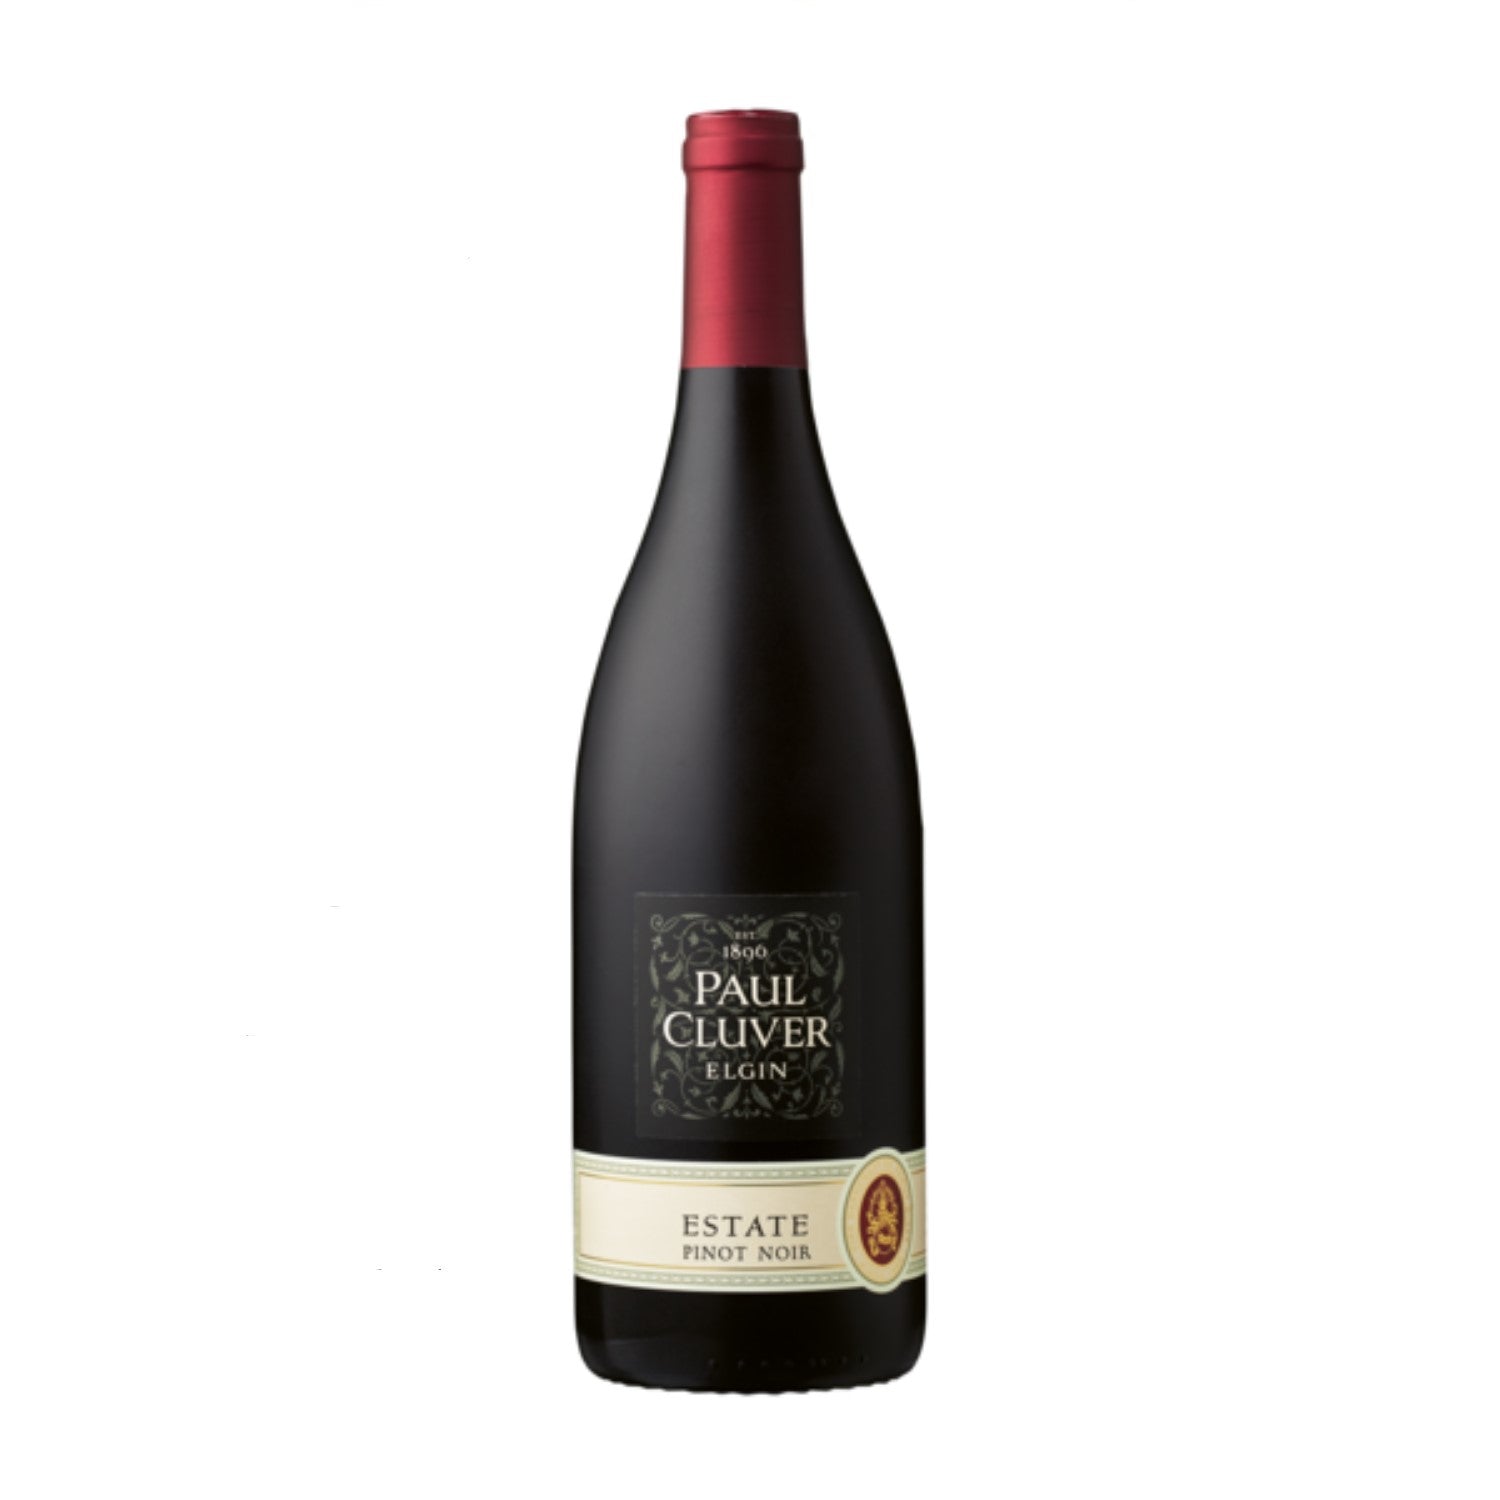 Paul Cluver Pinot Noir Estate Wine Elgin Valley Rotwein Wein trocken Südafrika (12 x 0.75l) - Versanel -